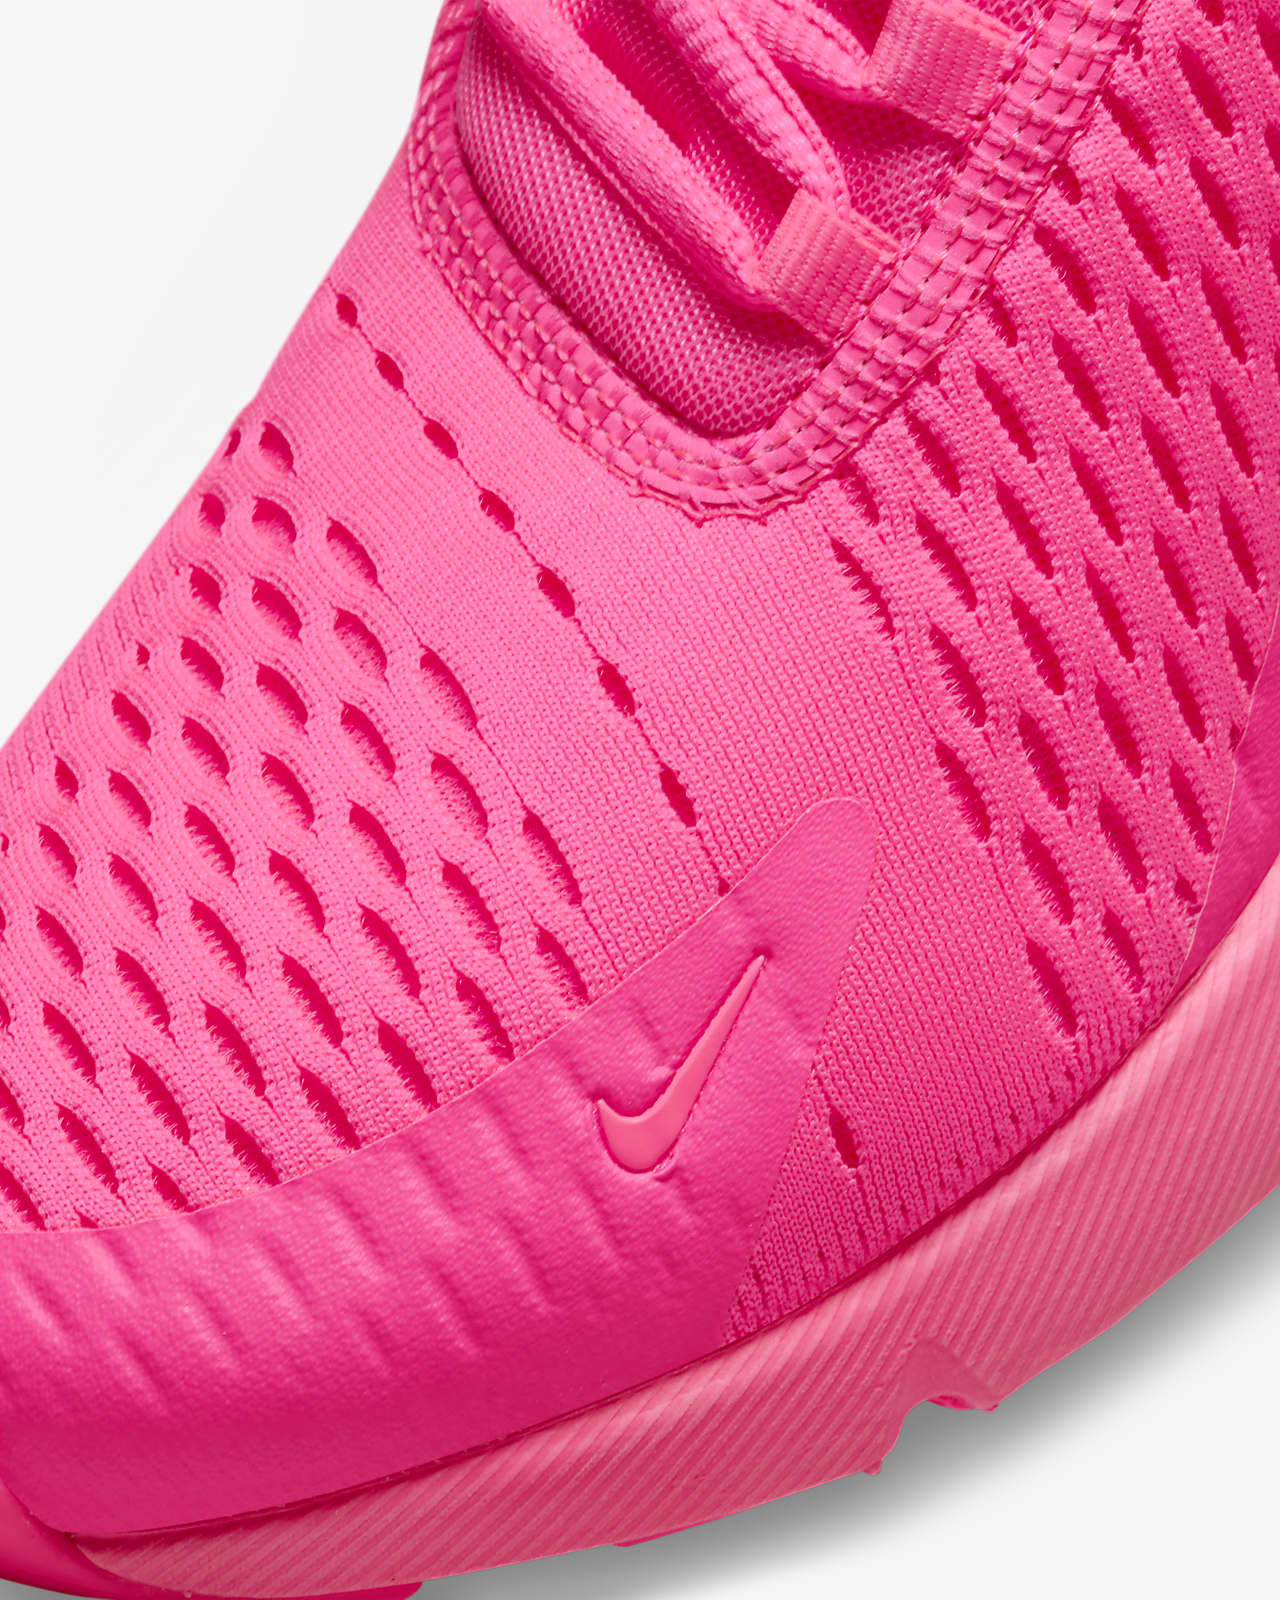 Nike Air Max 270 White Soft Pink (Women's)